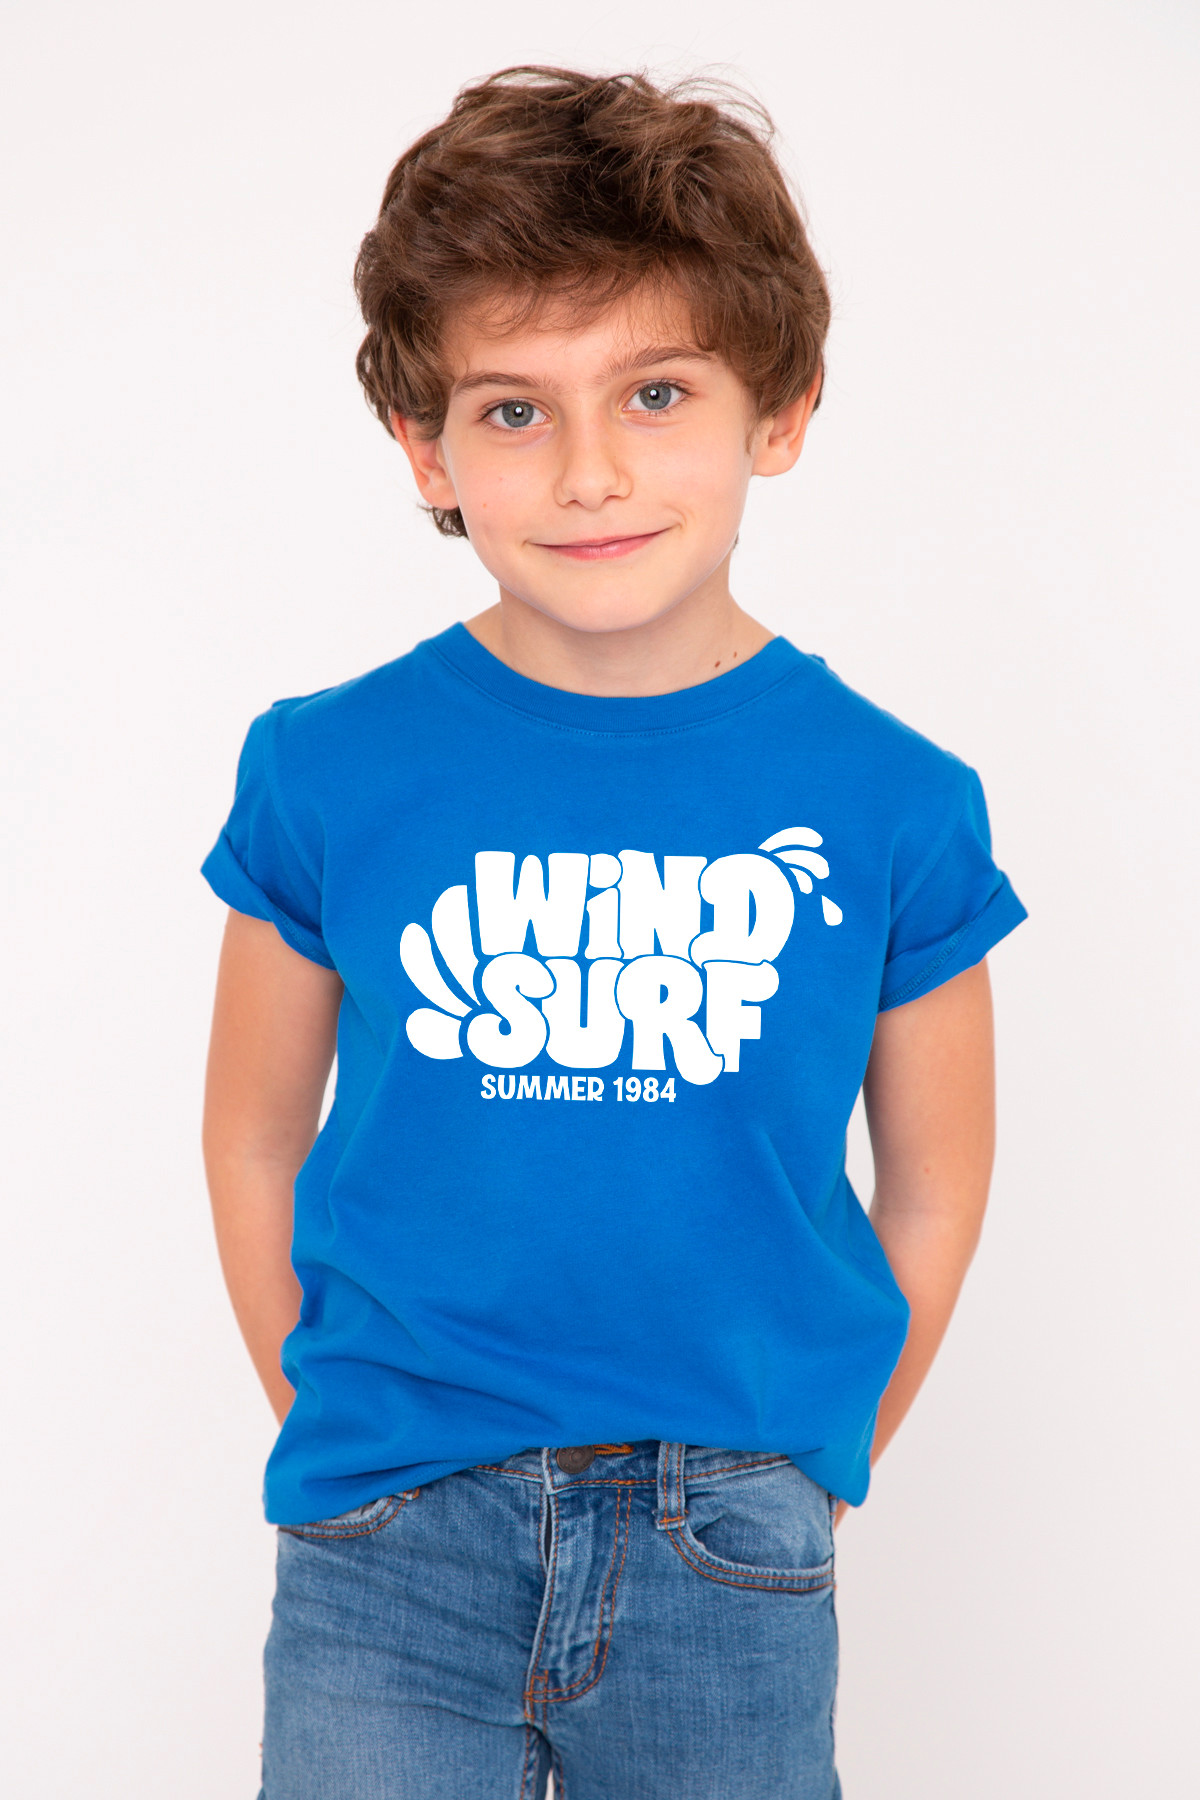 Tshirt Sacha WIND SURF